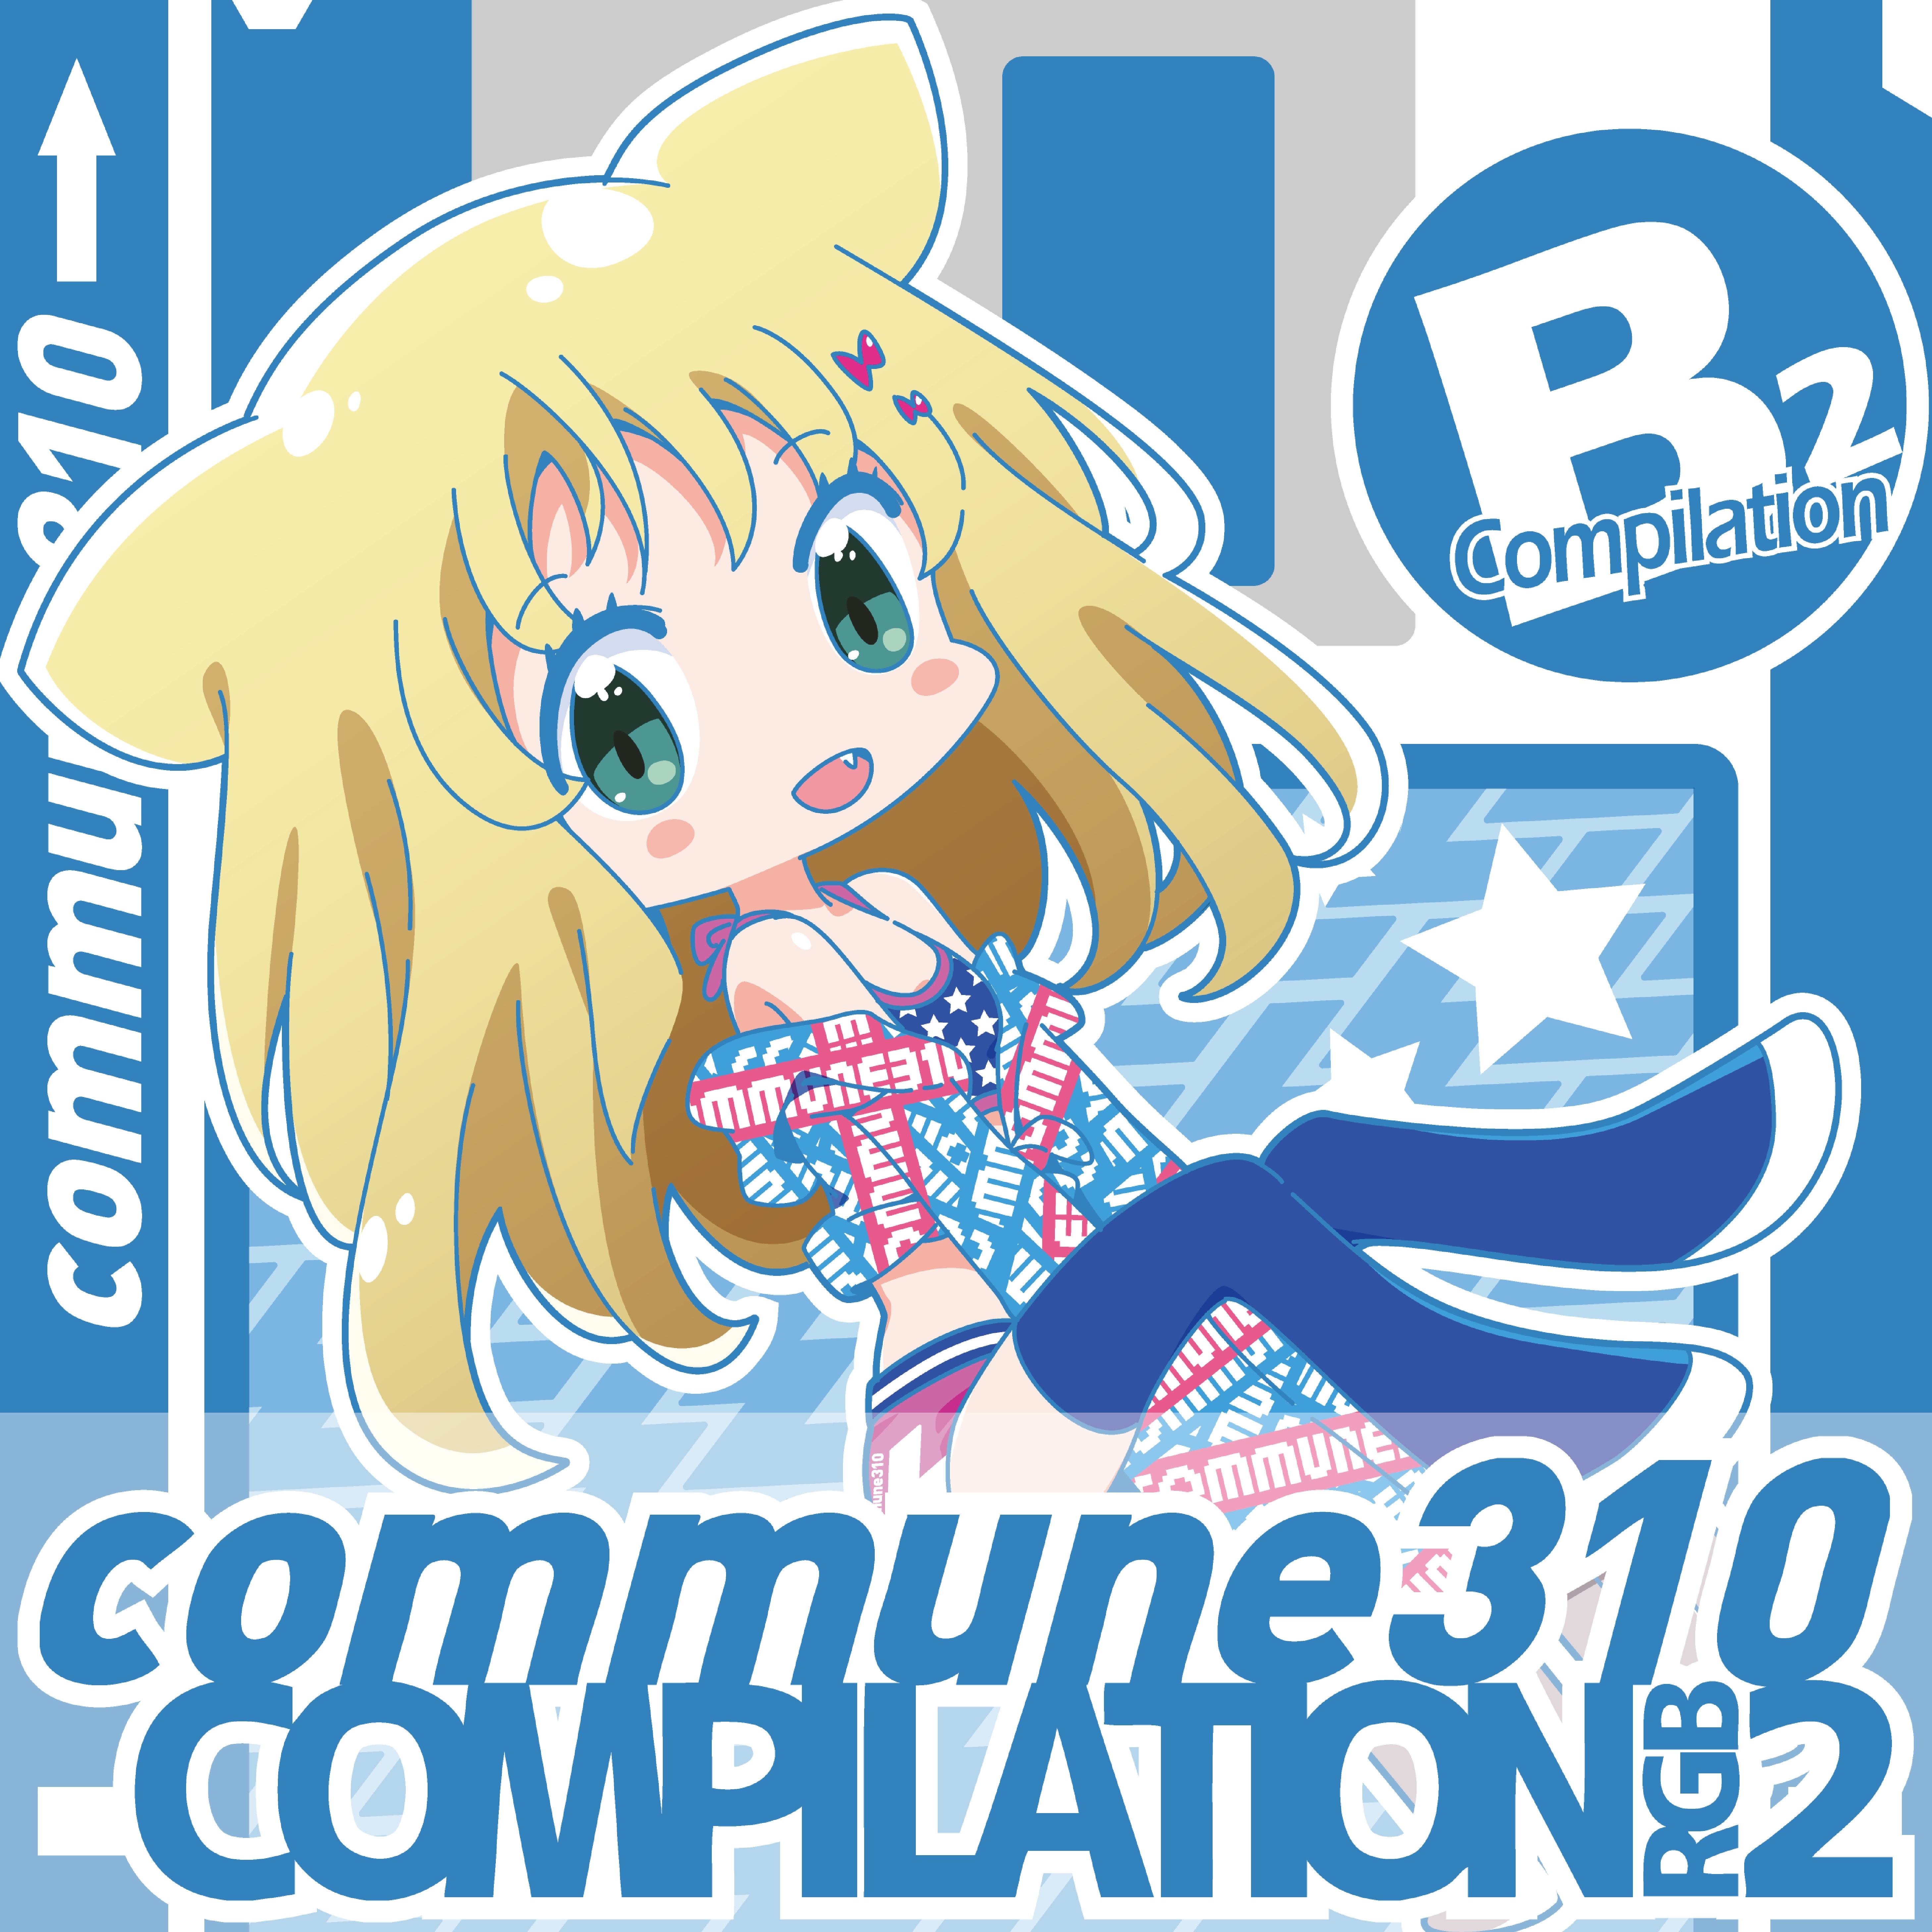 commune310 compilation B2